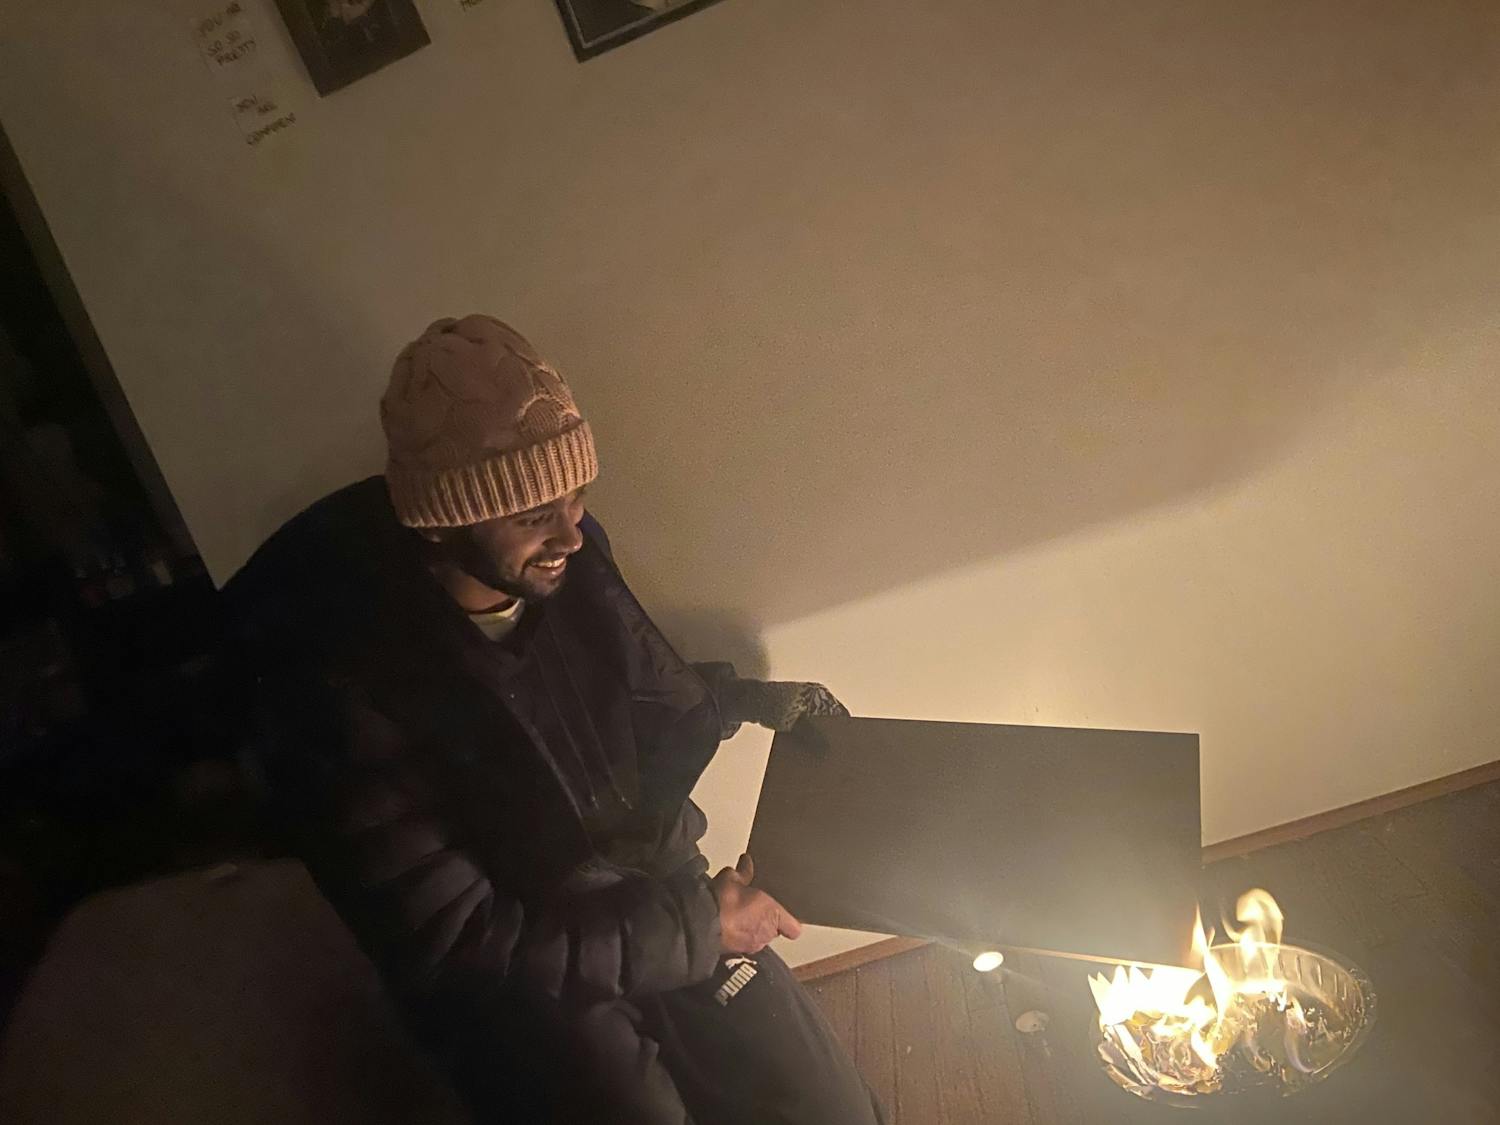 Karthik Ramkumar had to resort to burning a book to stay warm during Winter Storm Elliot.